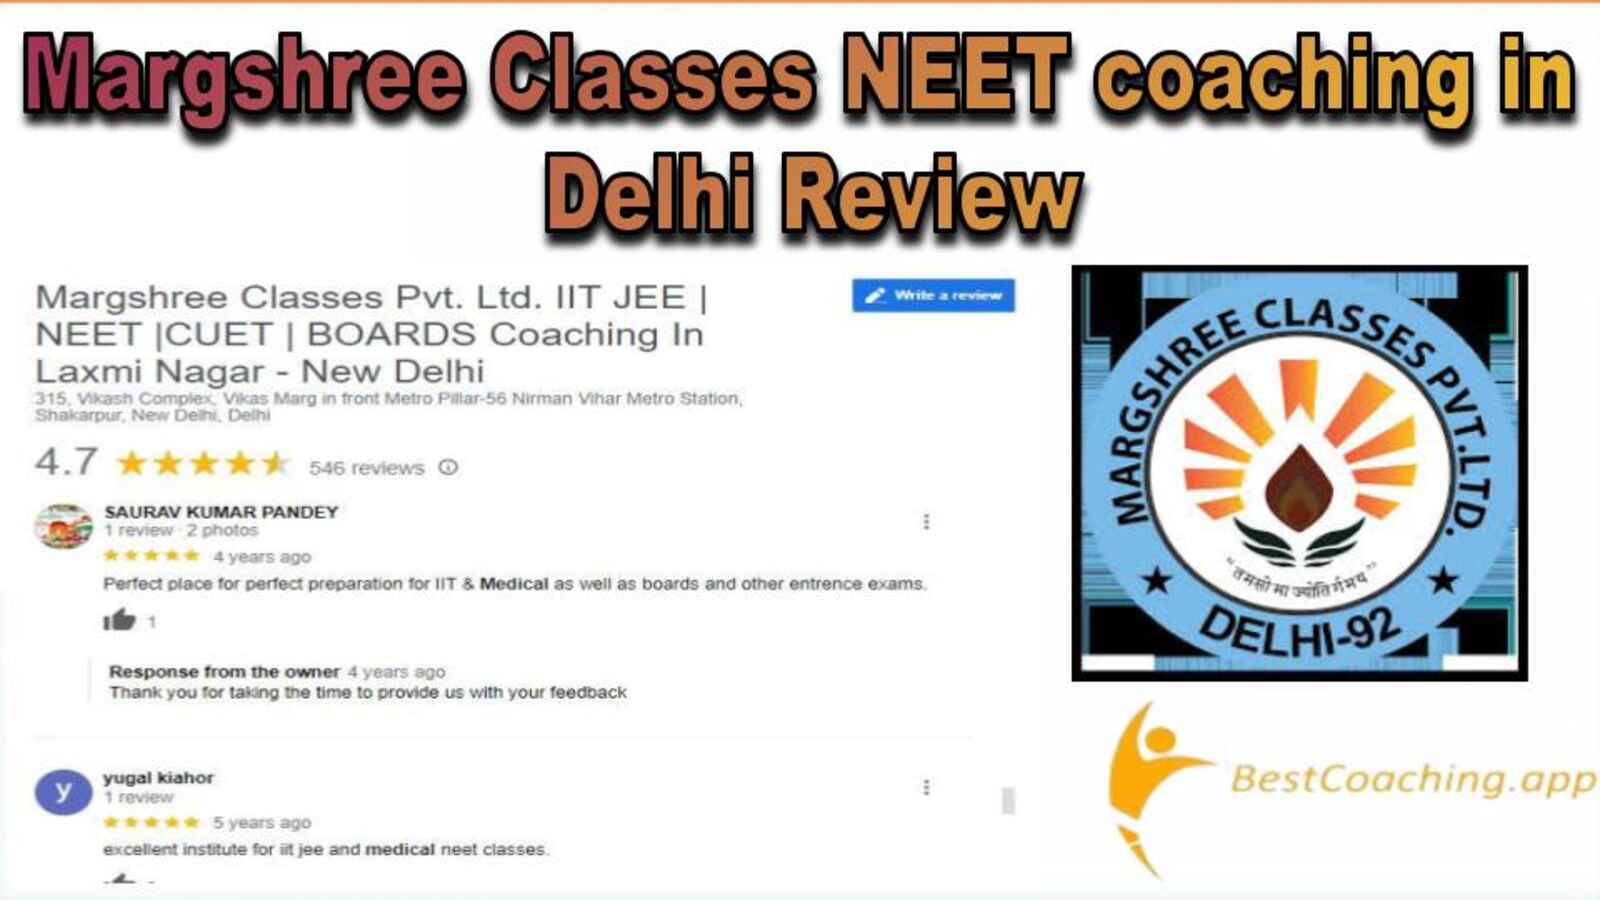 Margshree Classes NEET Coaching in Delhi Review